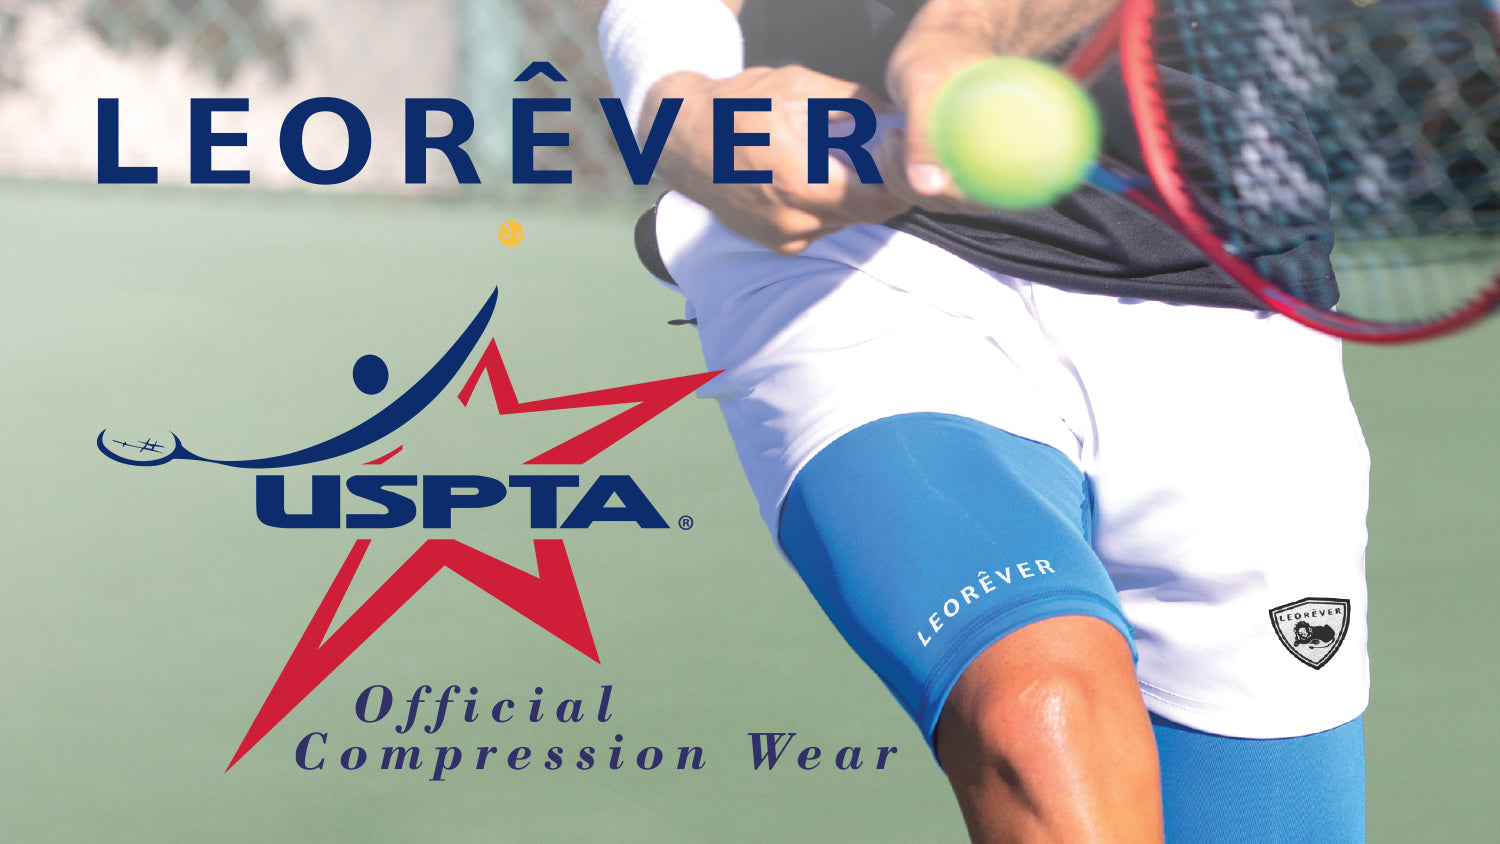 USPTA Official Compression Wear Image